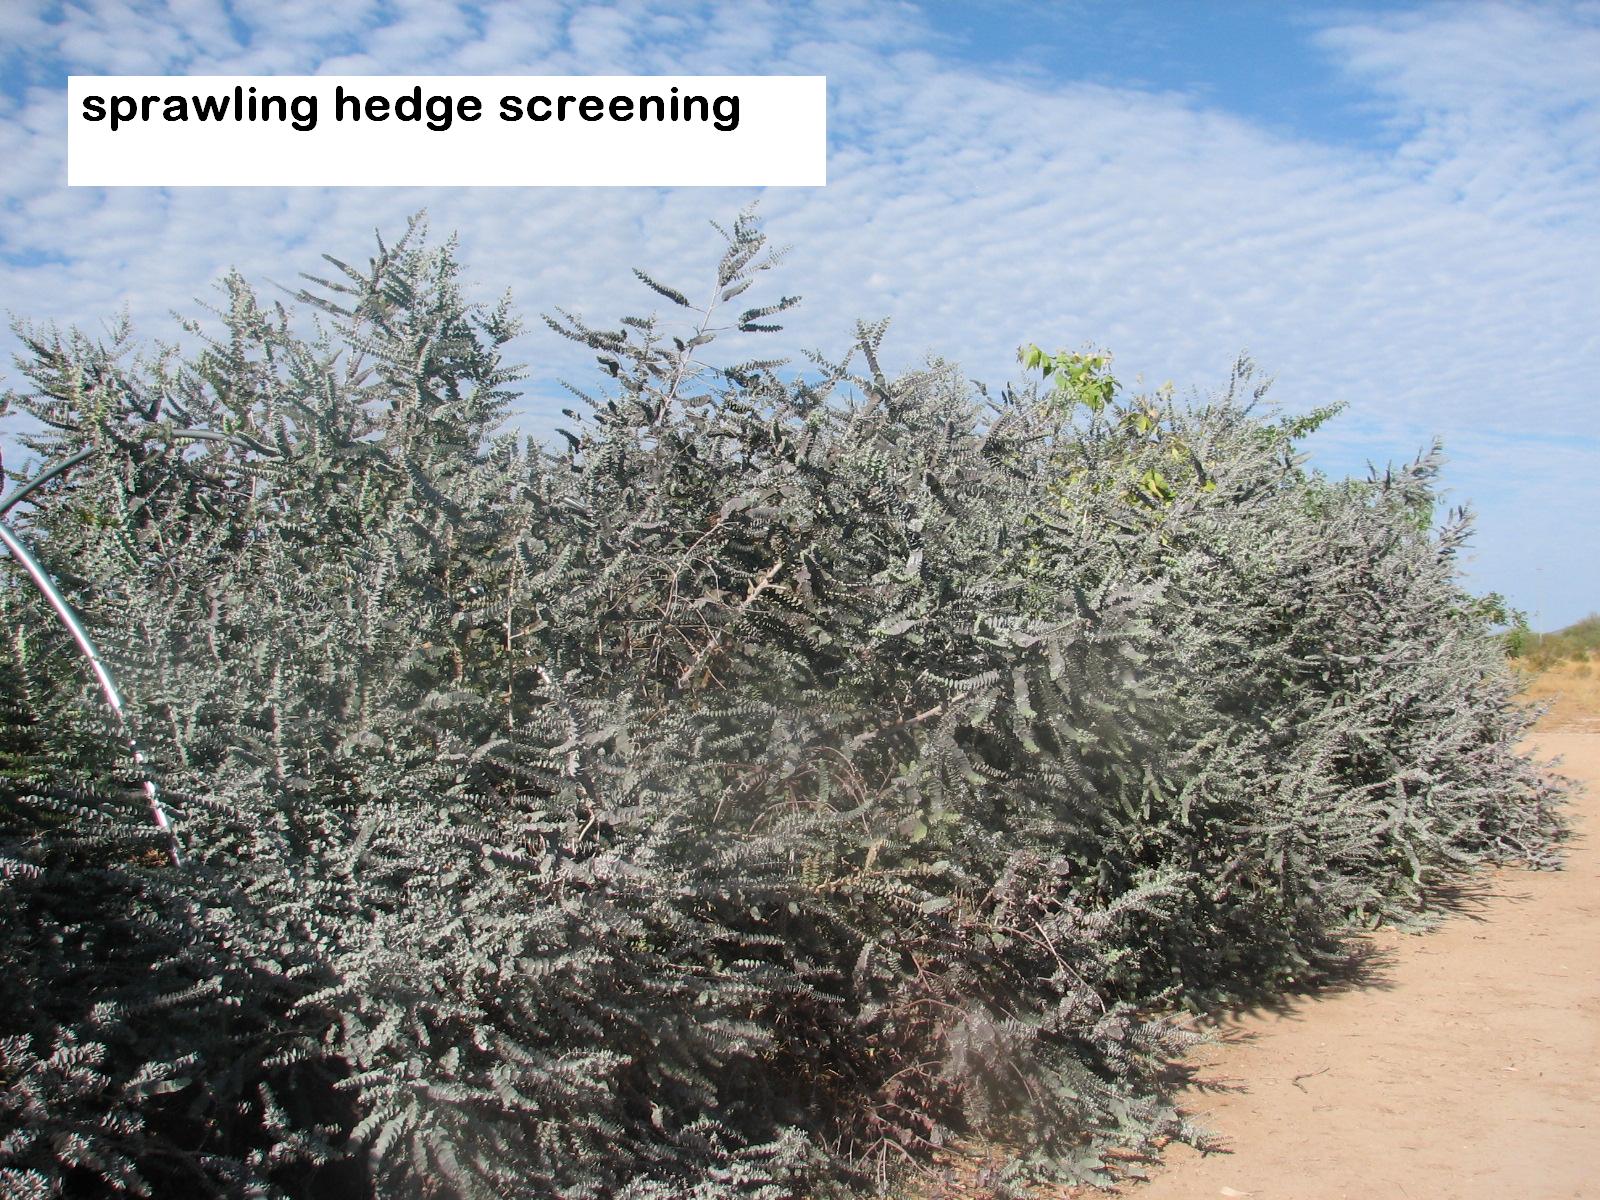 l Euc.kruseana sprawling screen hedge row.jpg